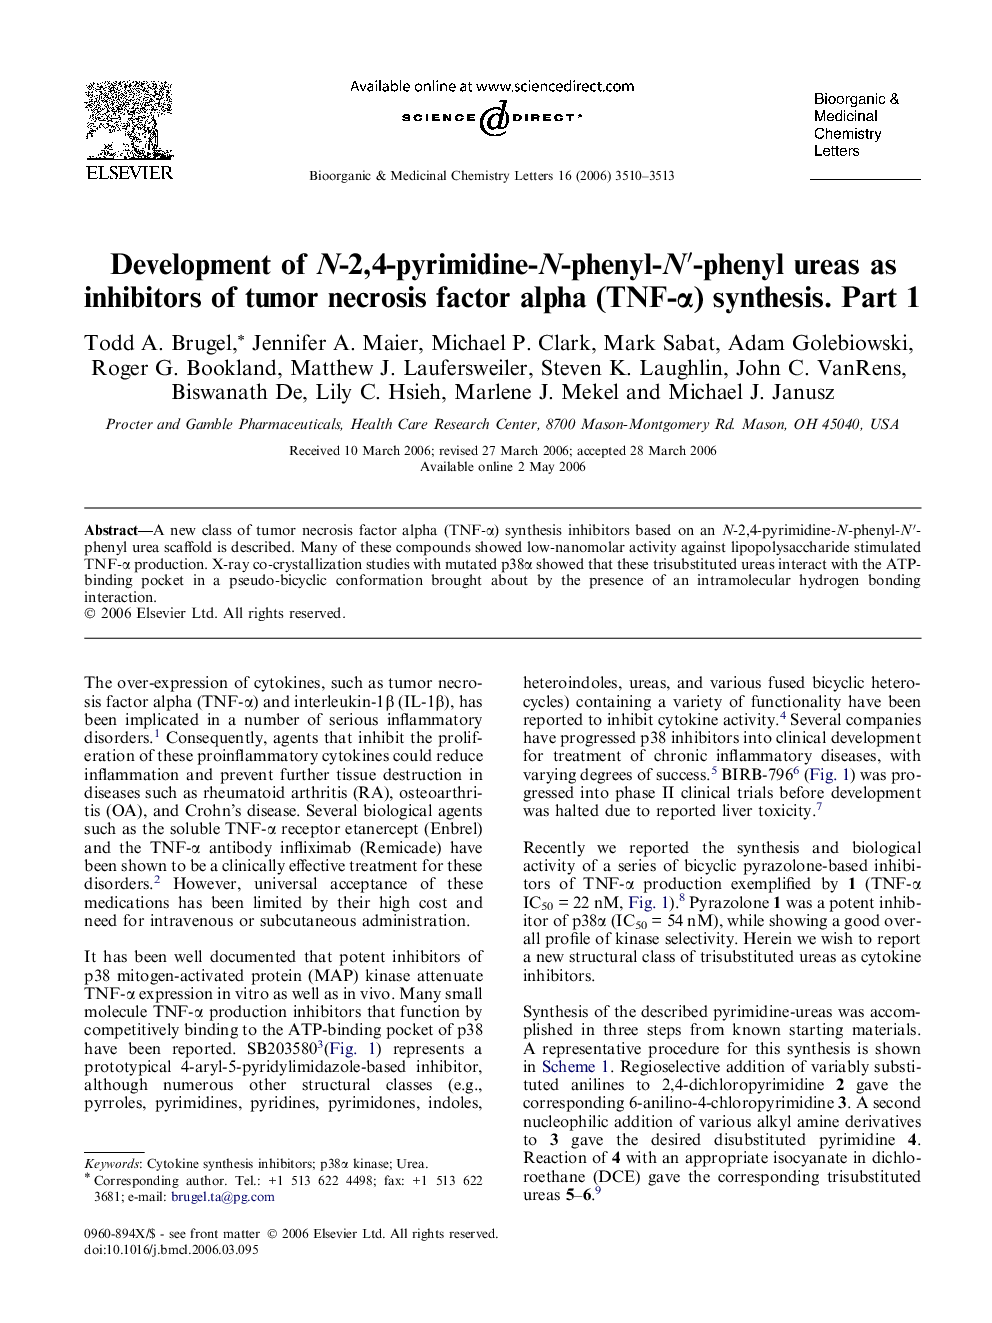 Development of N-2,4-pyrimidine-N-phenyl-N′-phenyl ureas as inhibitors of tumor necrosis factor alpha (TNF-α) synthesis. Part 1